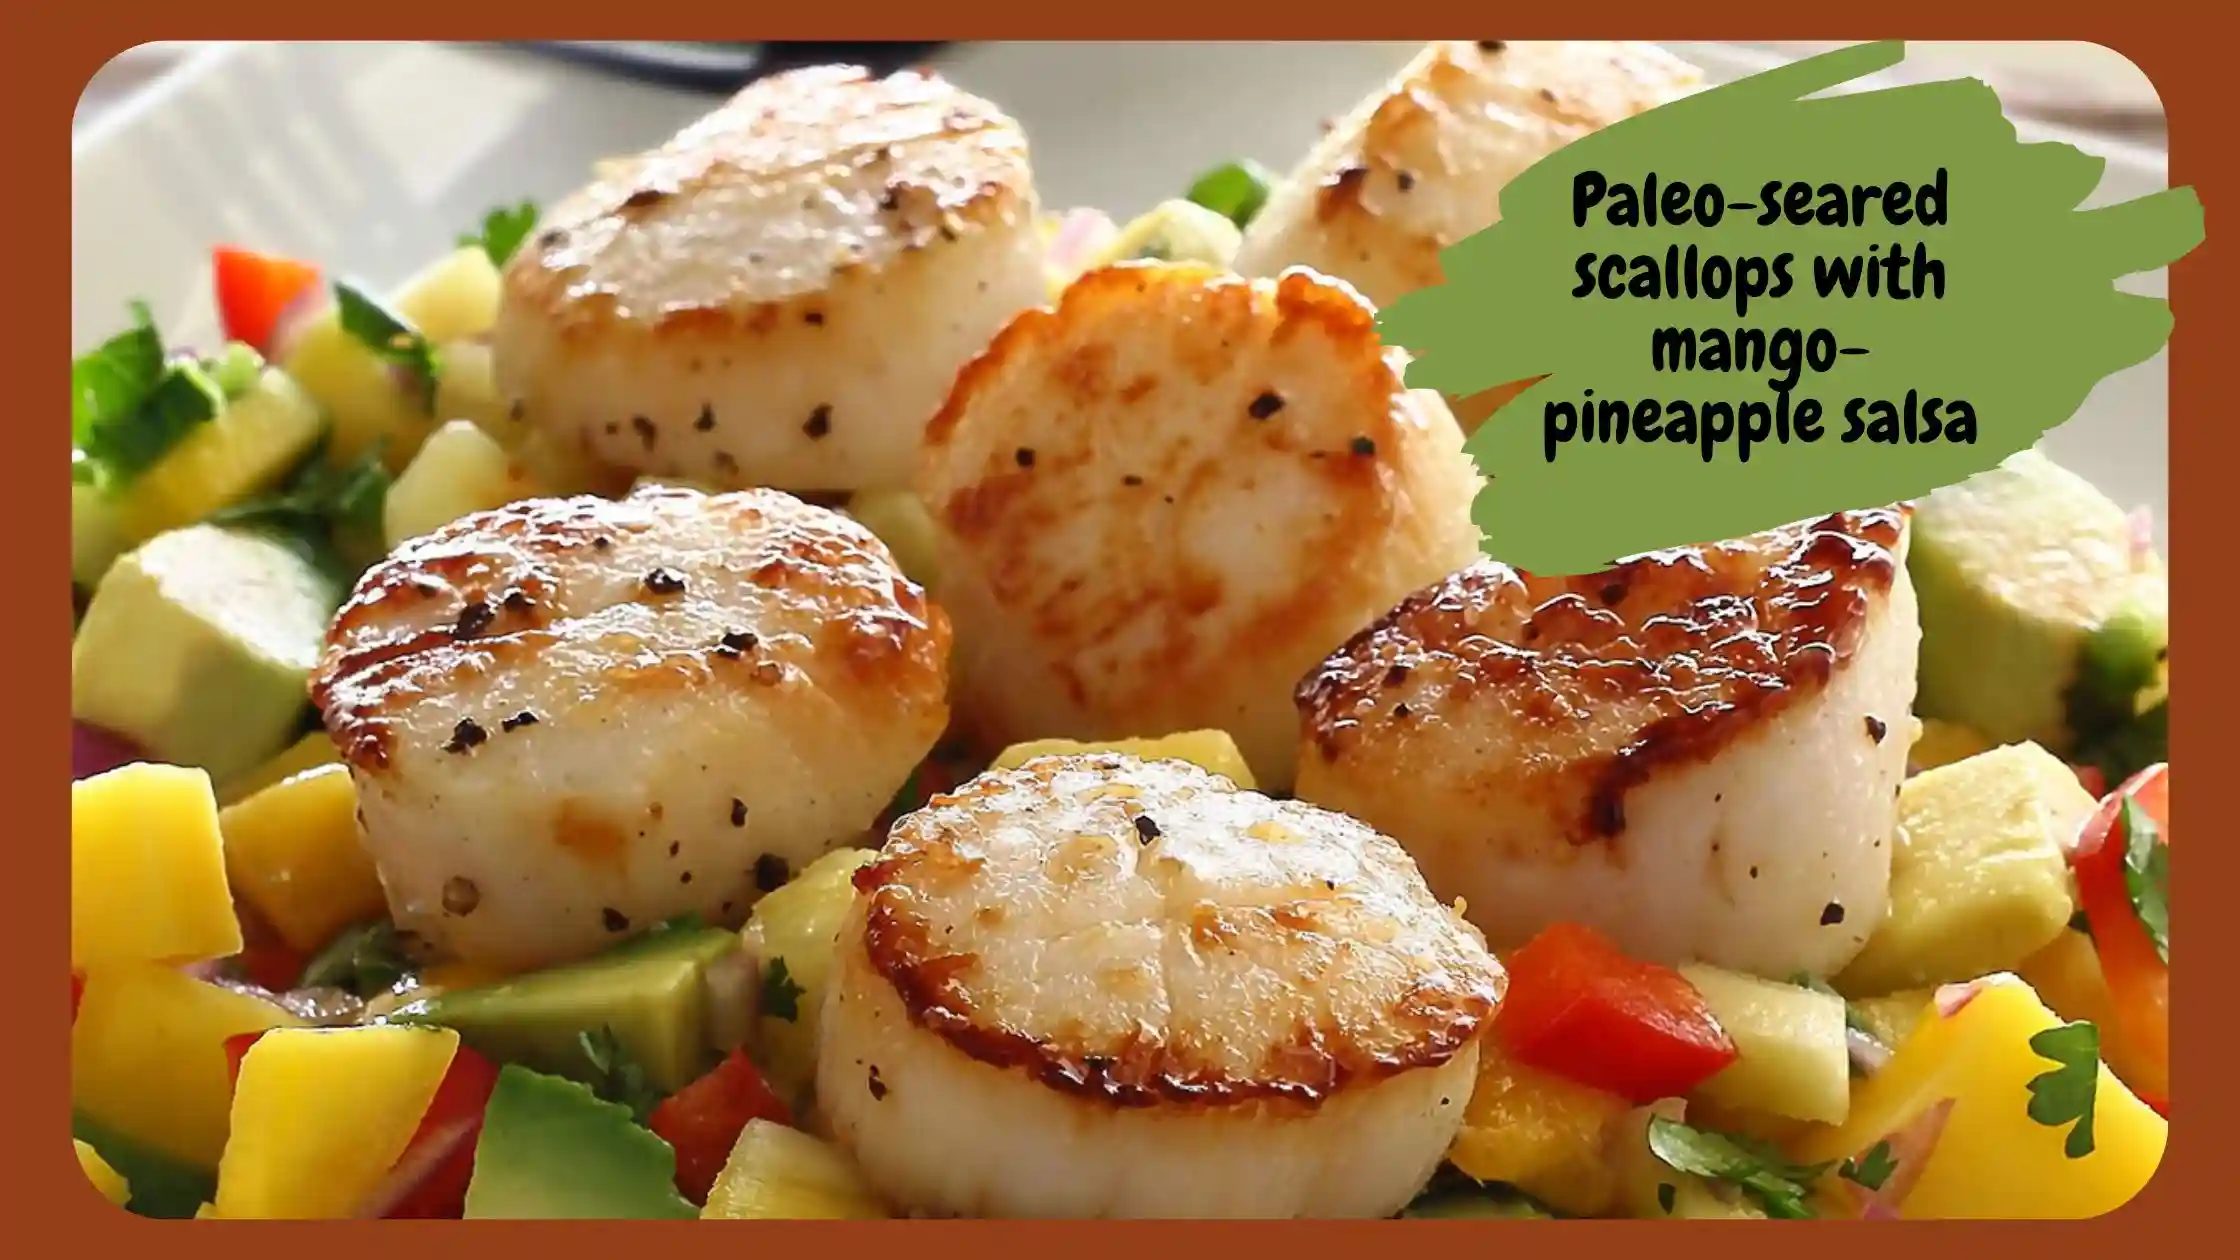 Paleo-seared scallops with mango-pineapple salsa